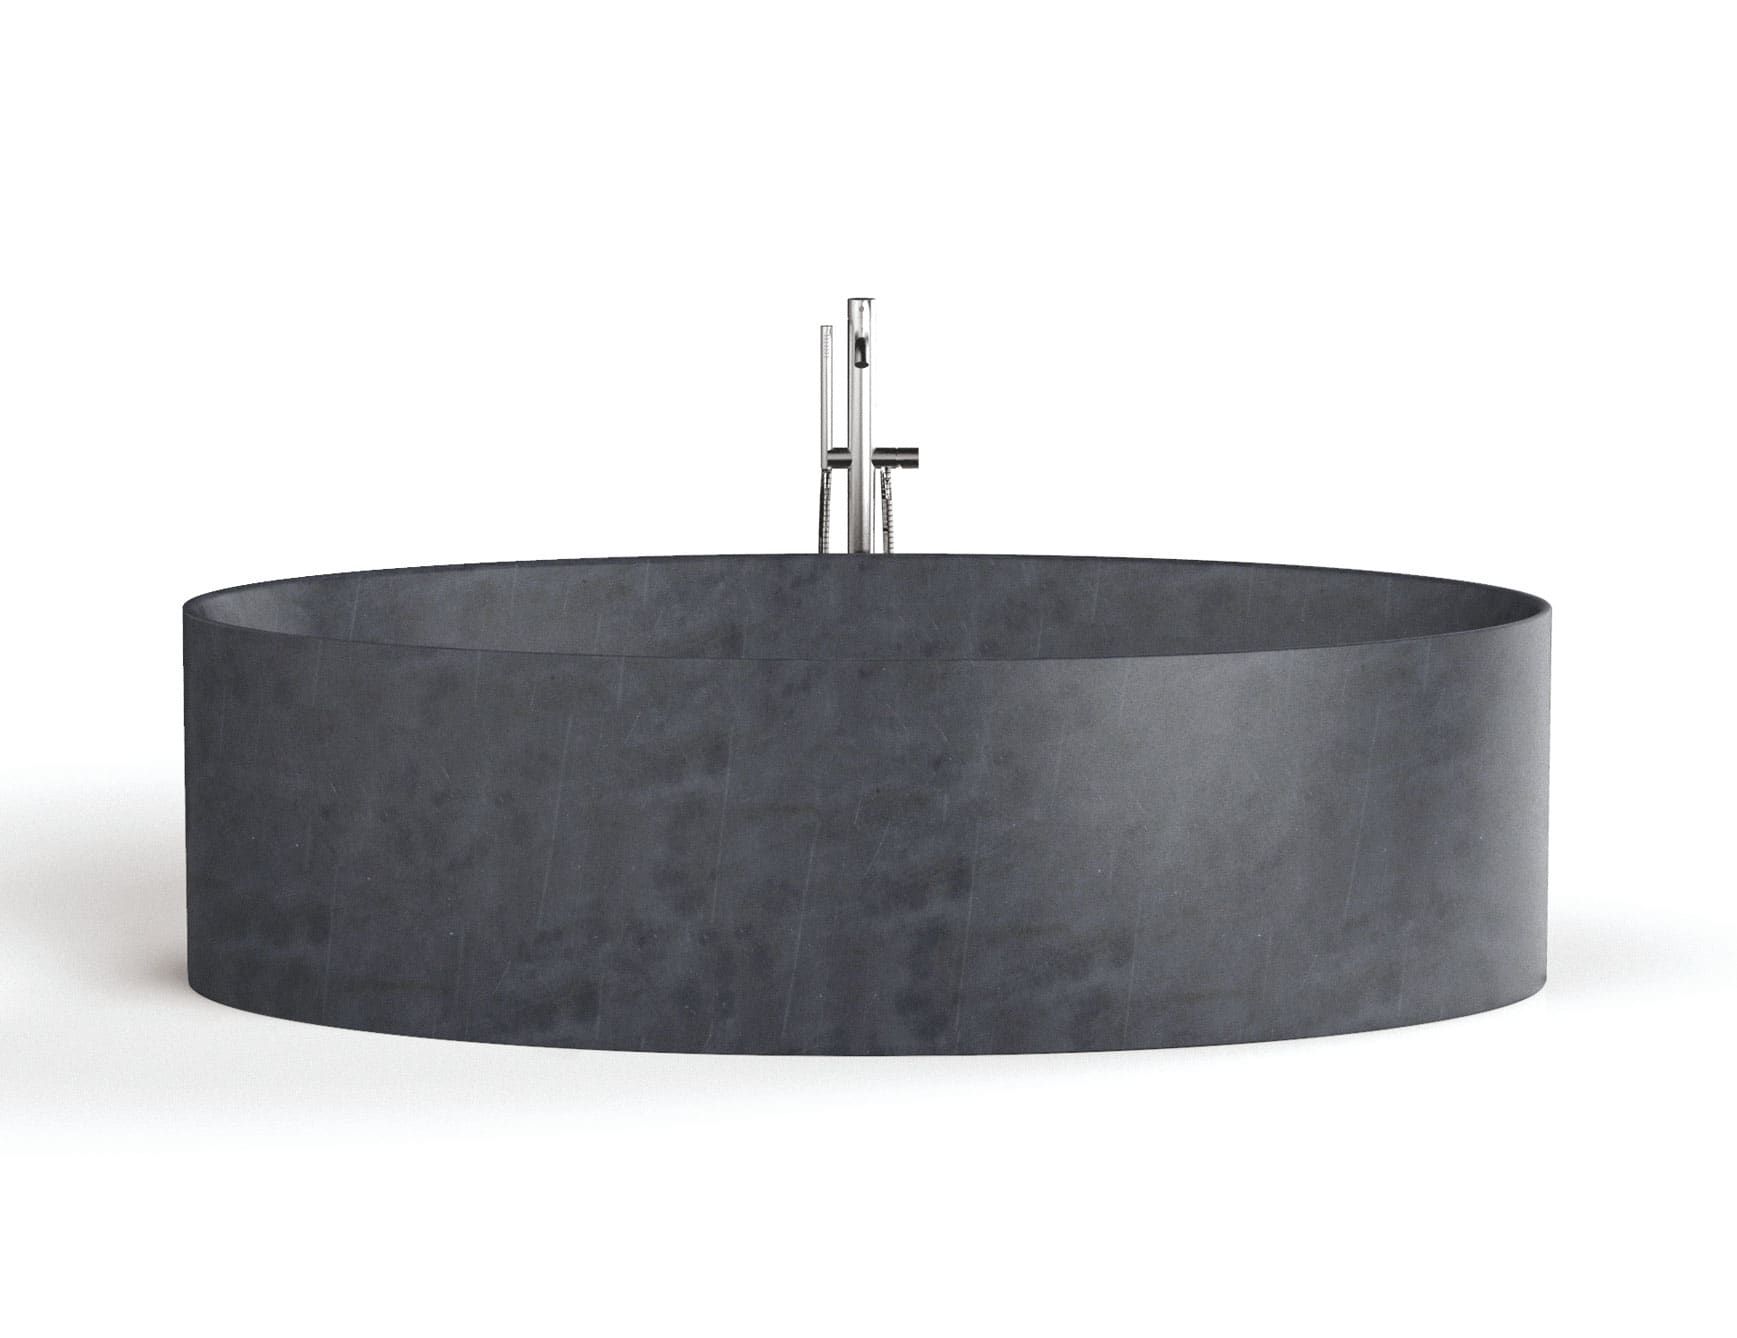 Ovale contemporary Italian bathtub with grey Pietra Lavica stone